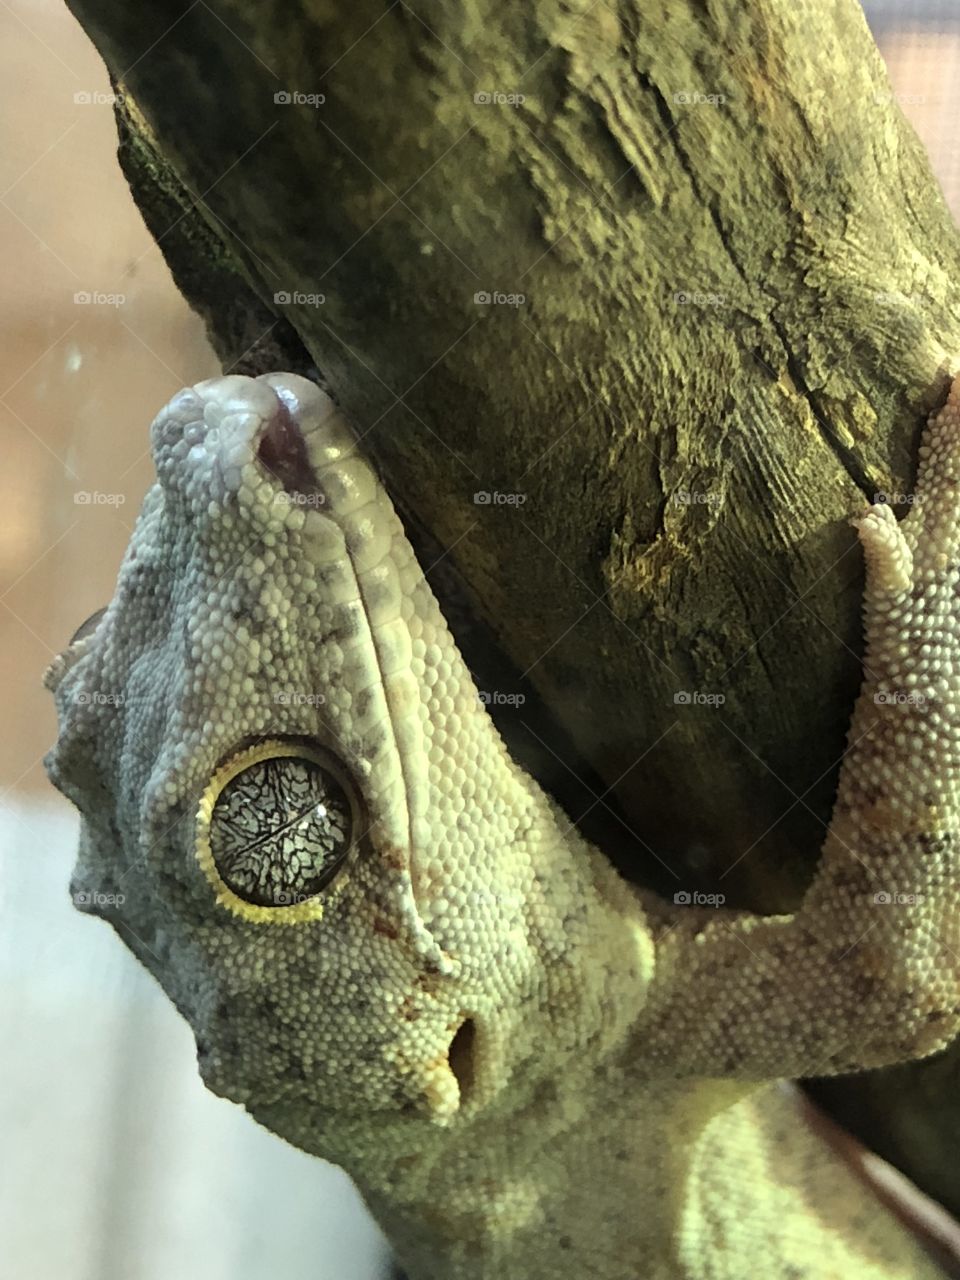 Lizard eye from the Denver Zoo